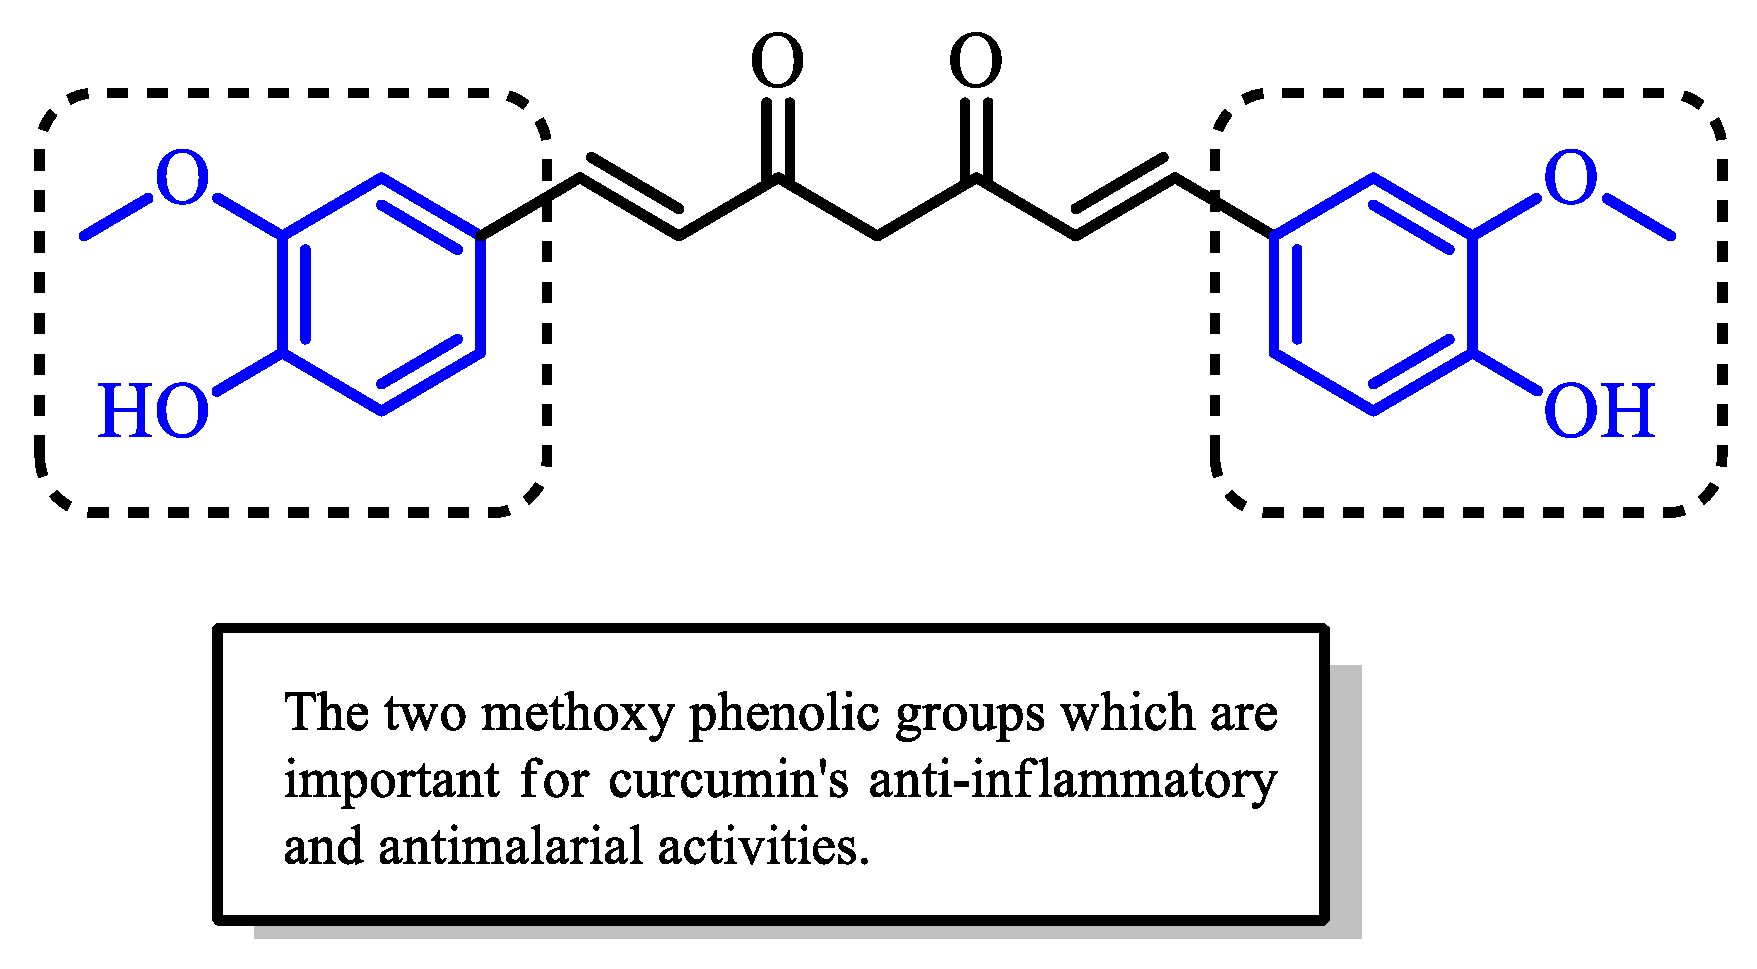 Artemisinin and artemisinin derivatives as anti-fibrotic